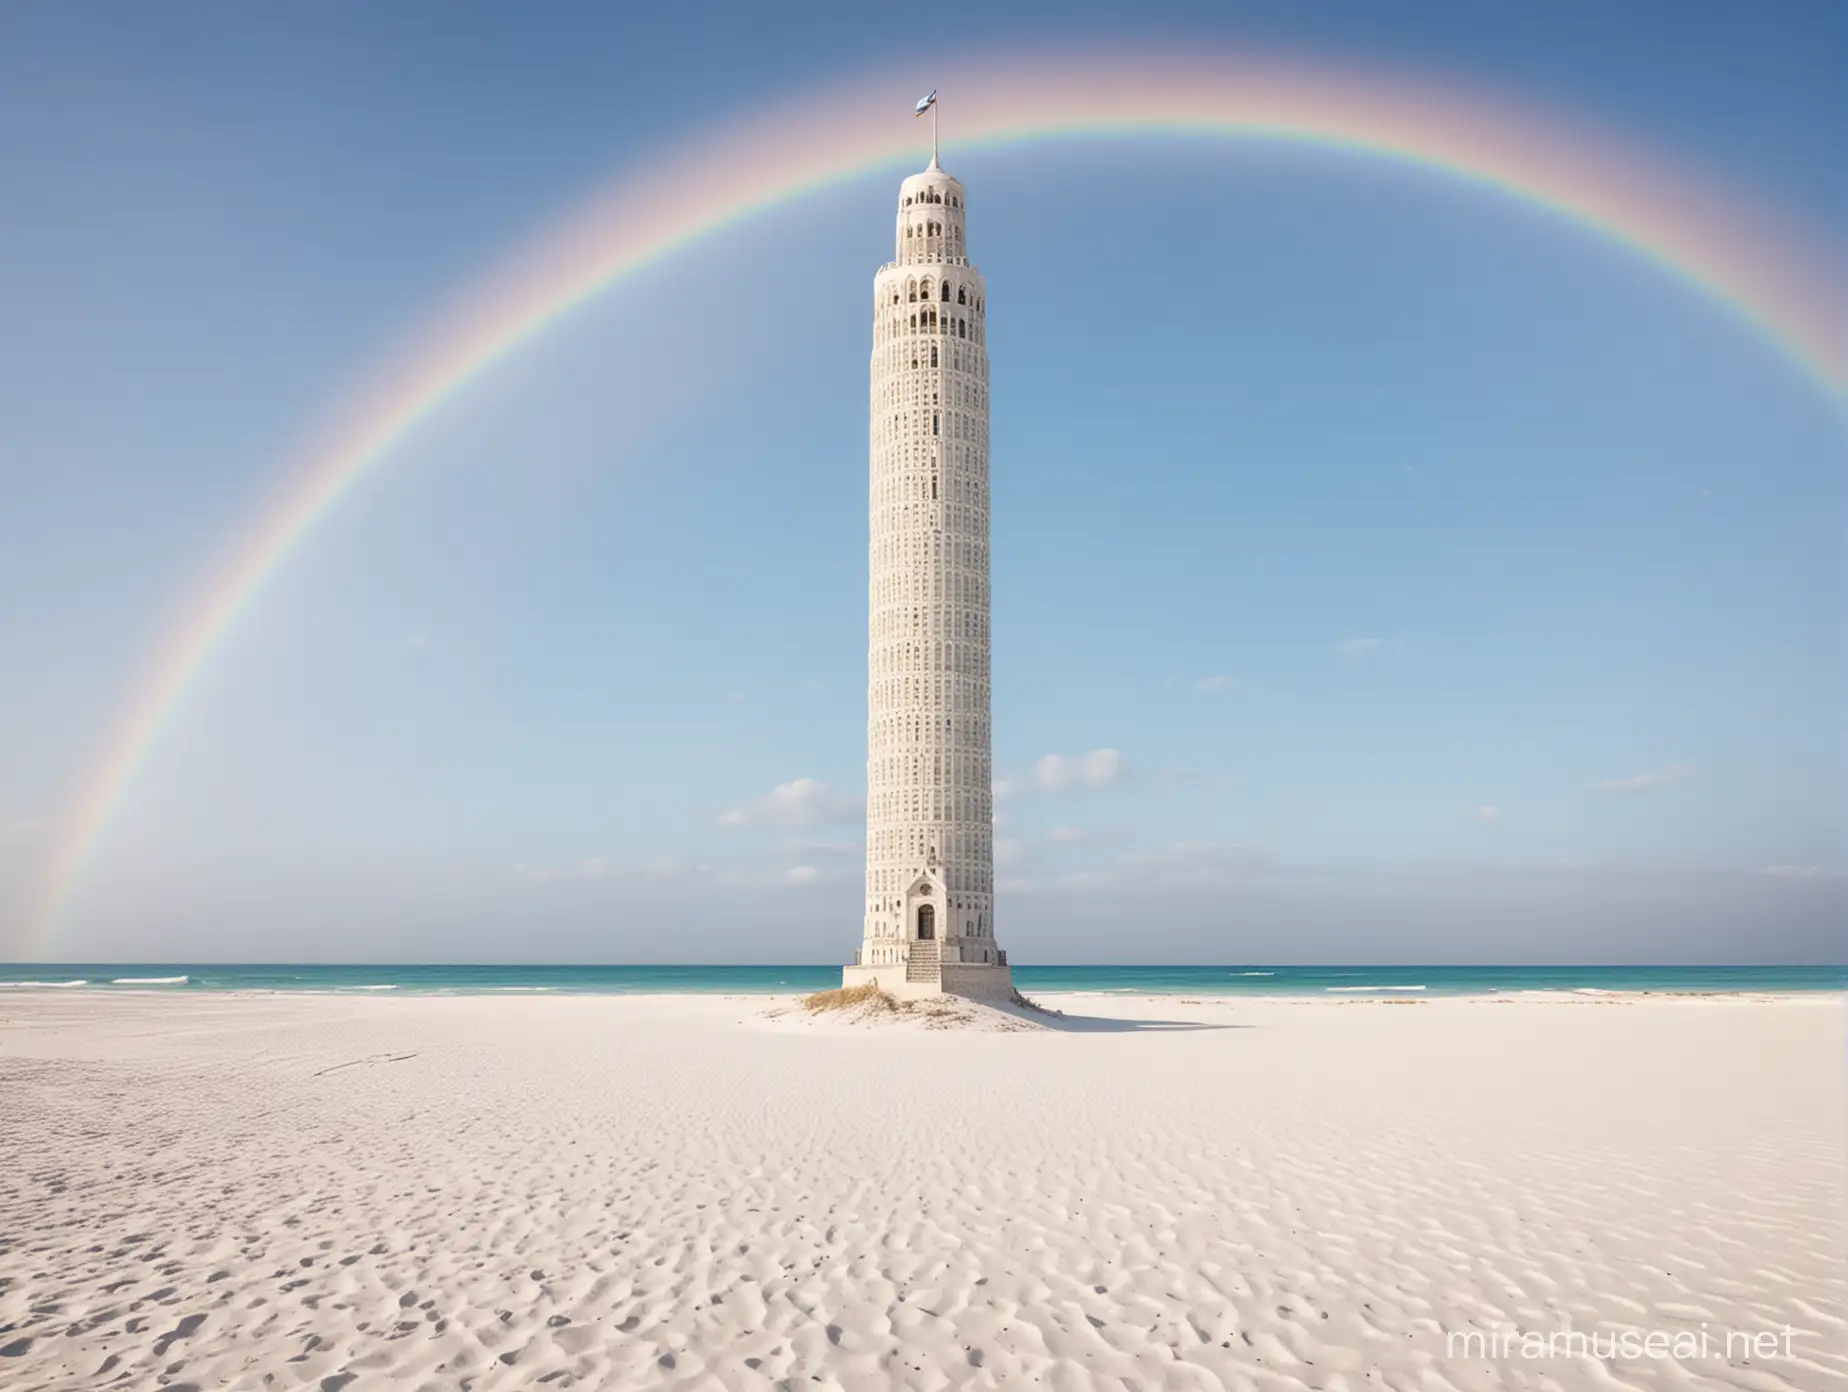 Romantic Fantasy Skyscraper Tower on White Sand Beach with Rainbow